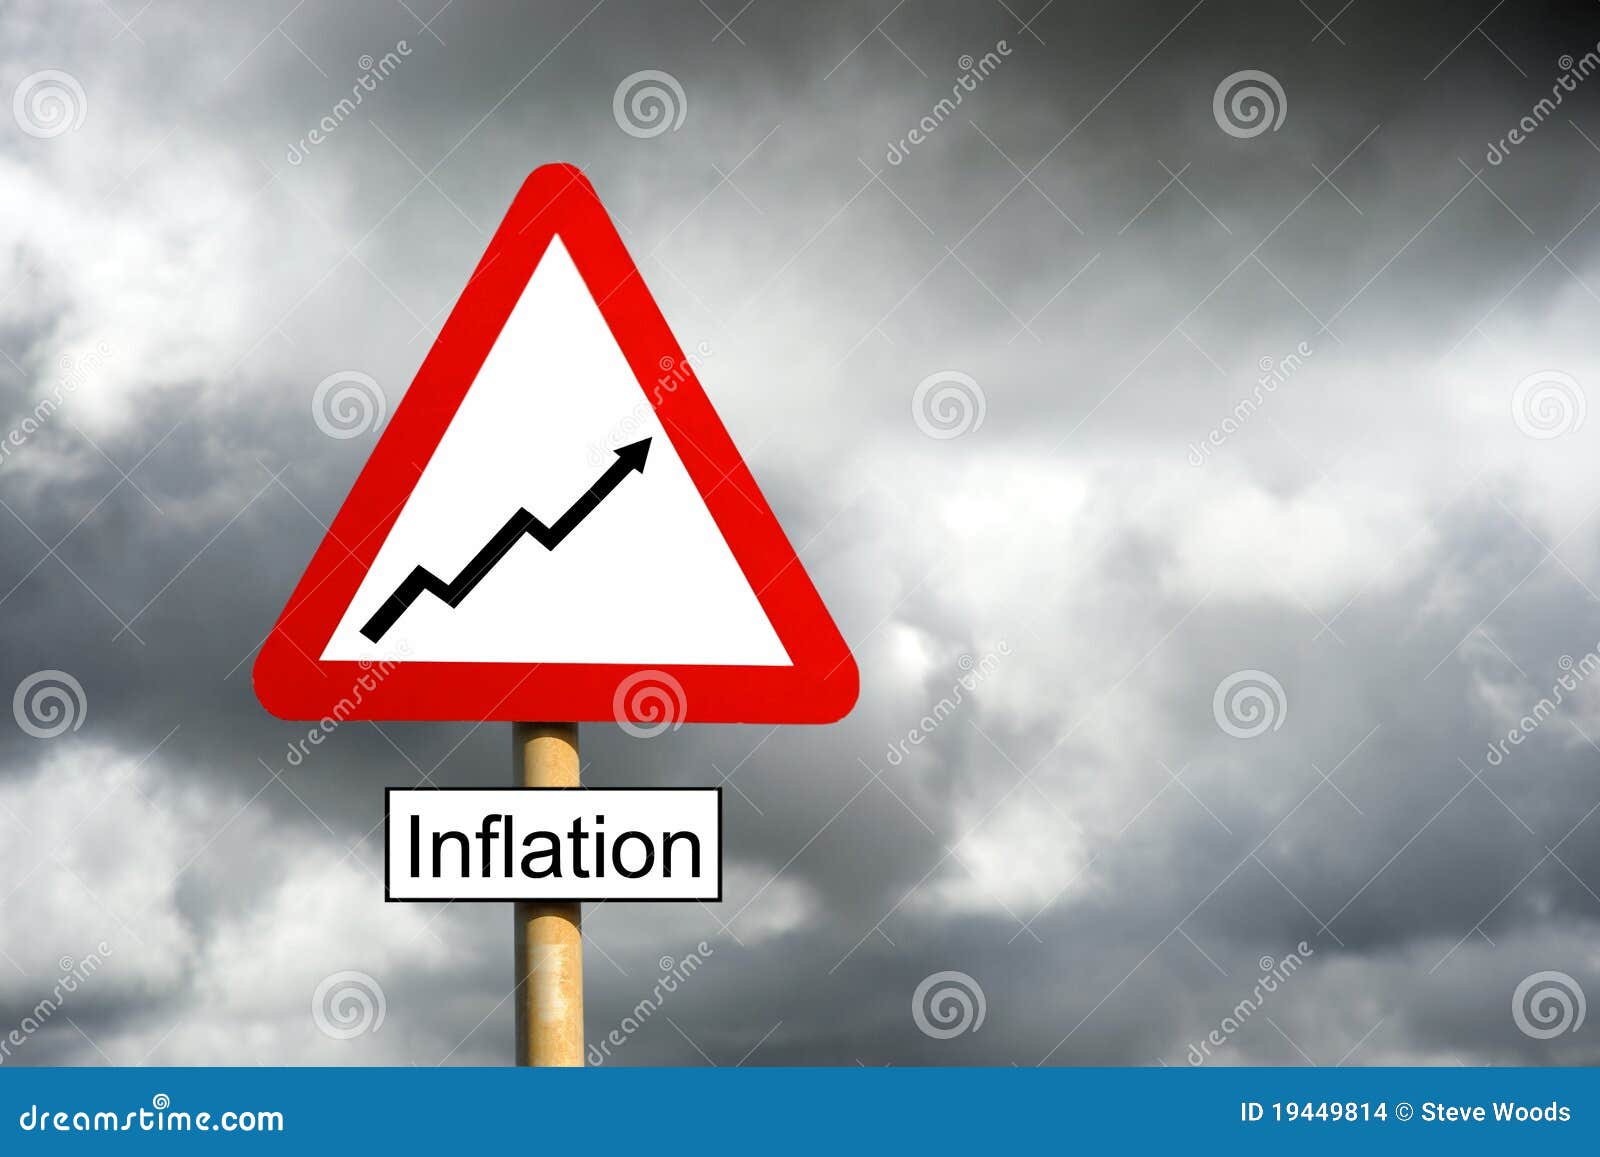 inflation warning